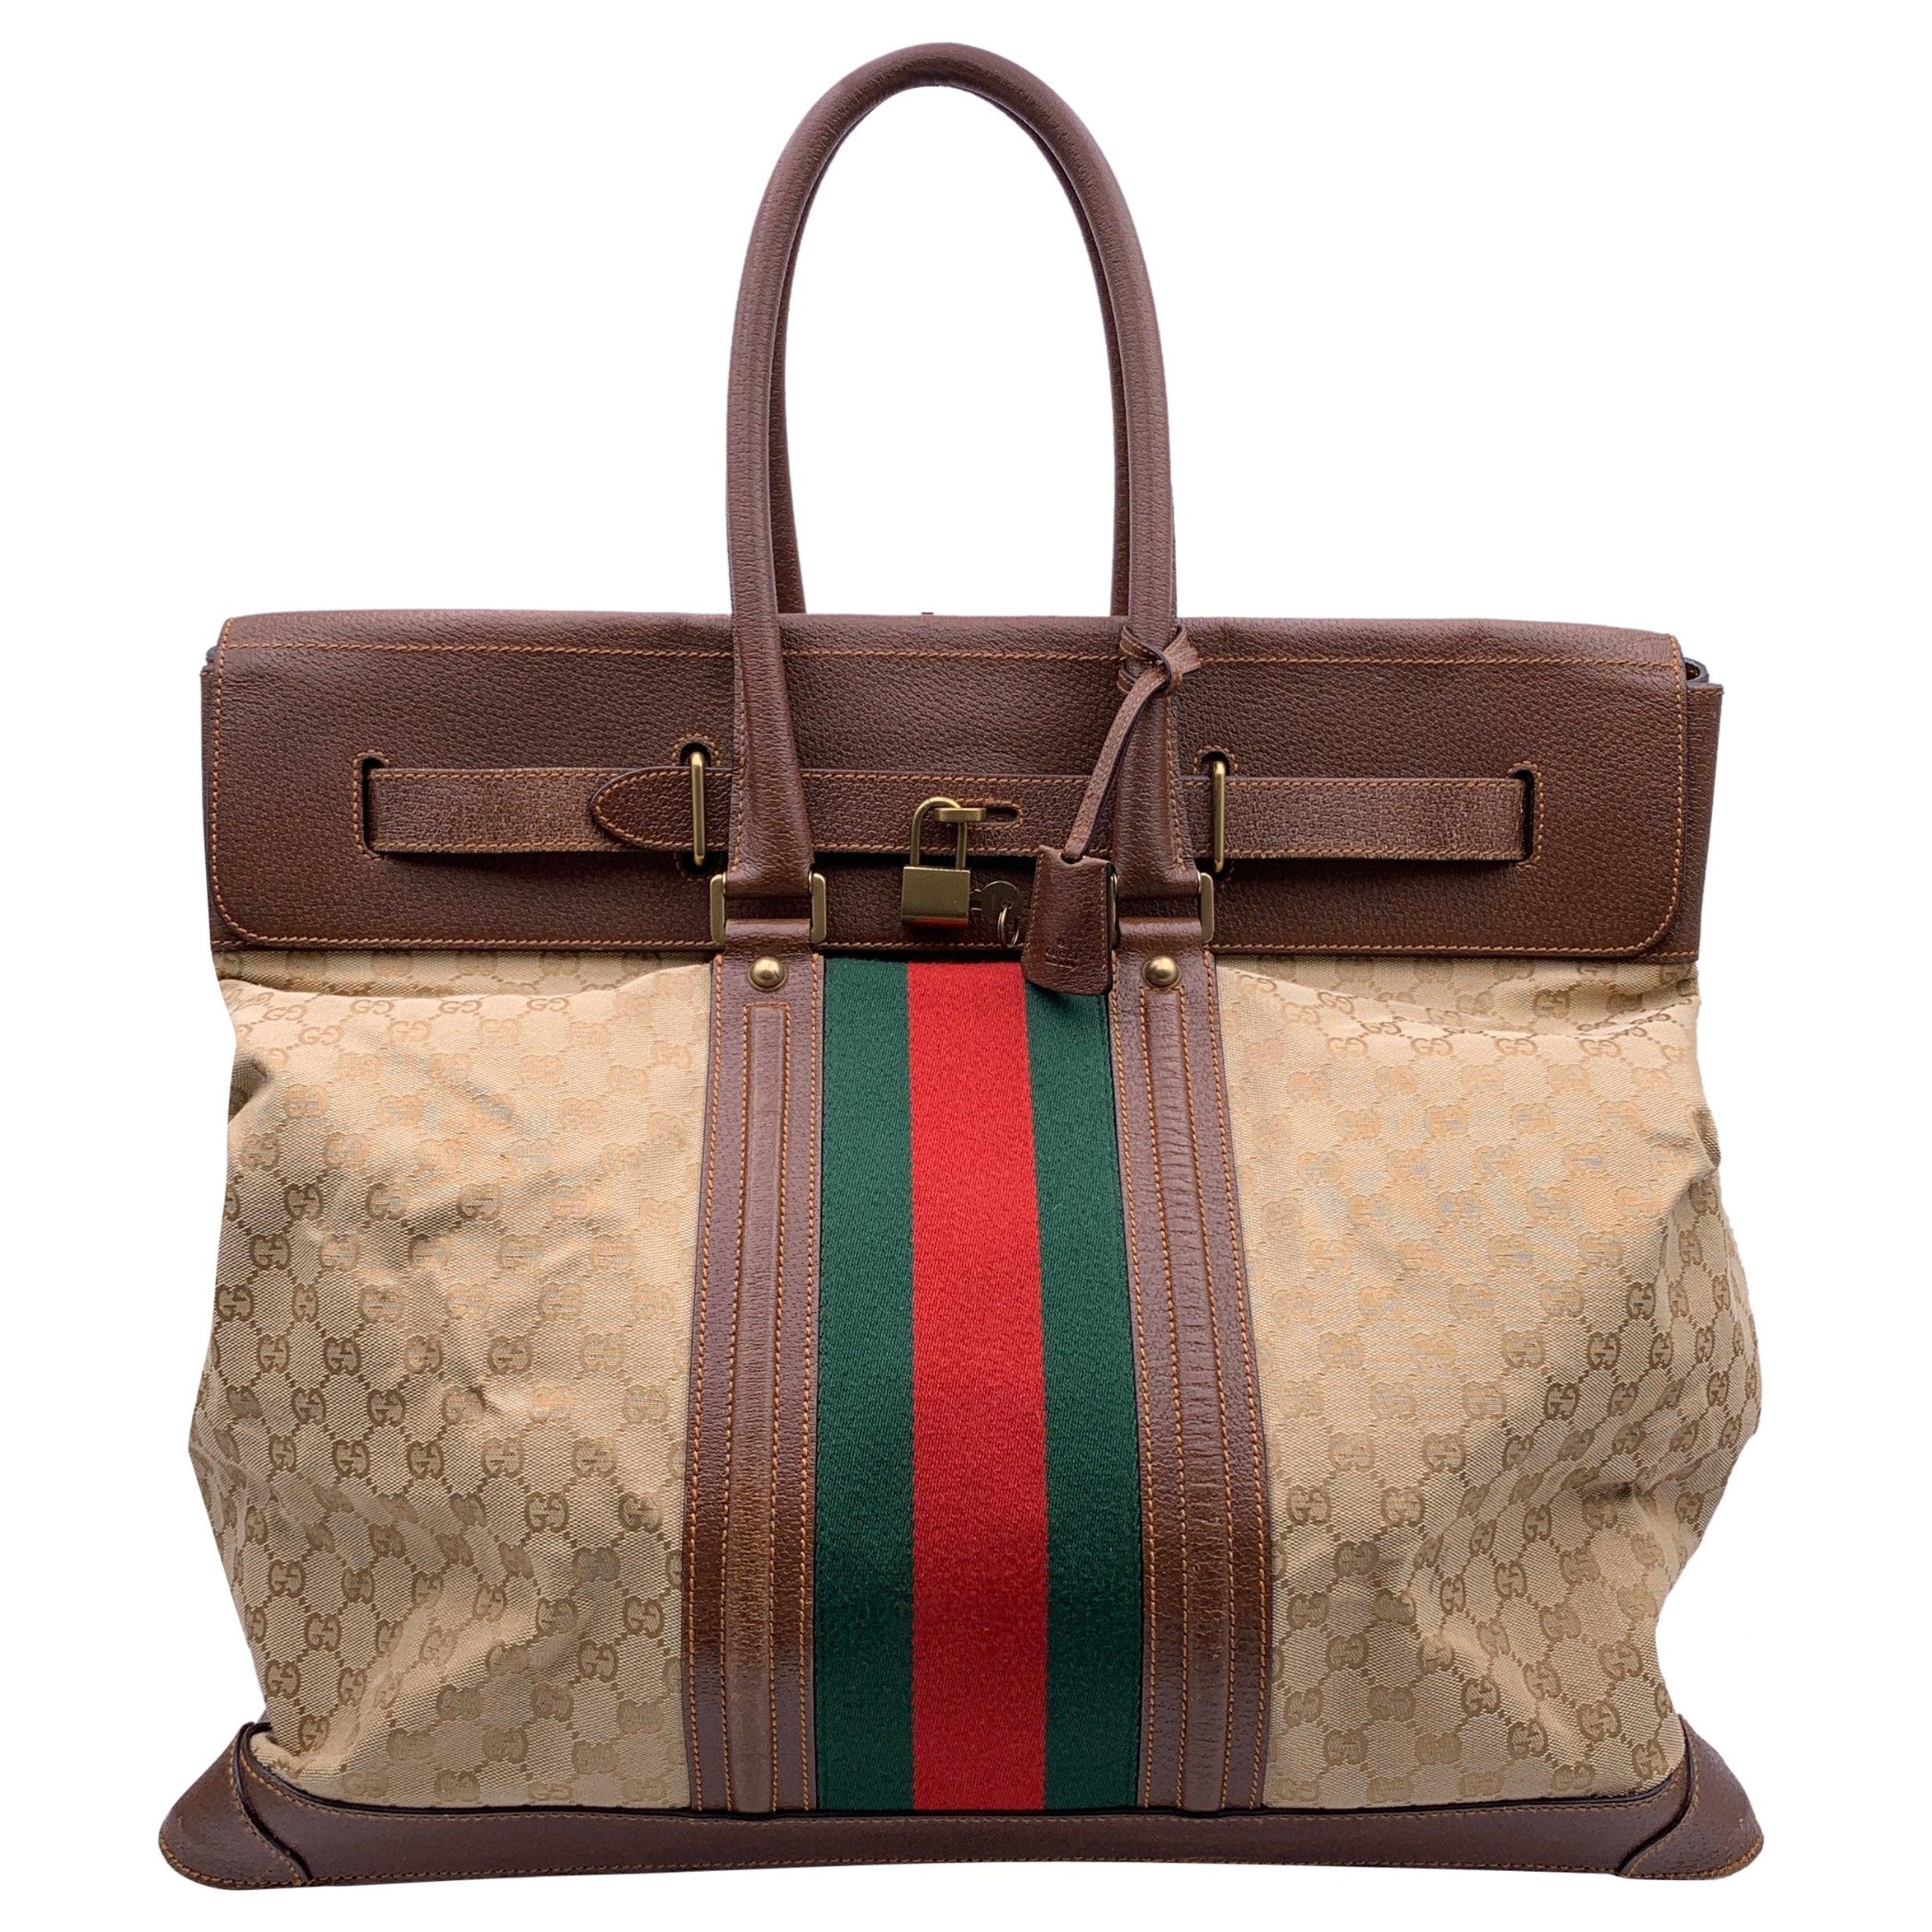 Gucci Beige Monogram Canvas Weekender Travel Bag with Stripes For Sale